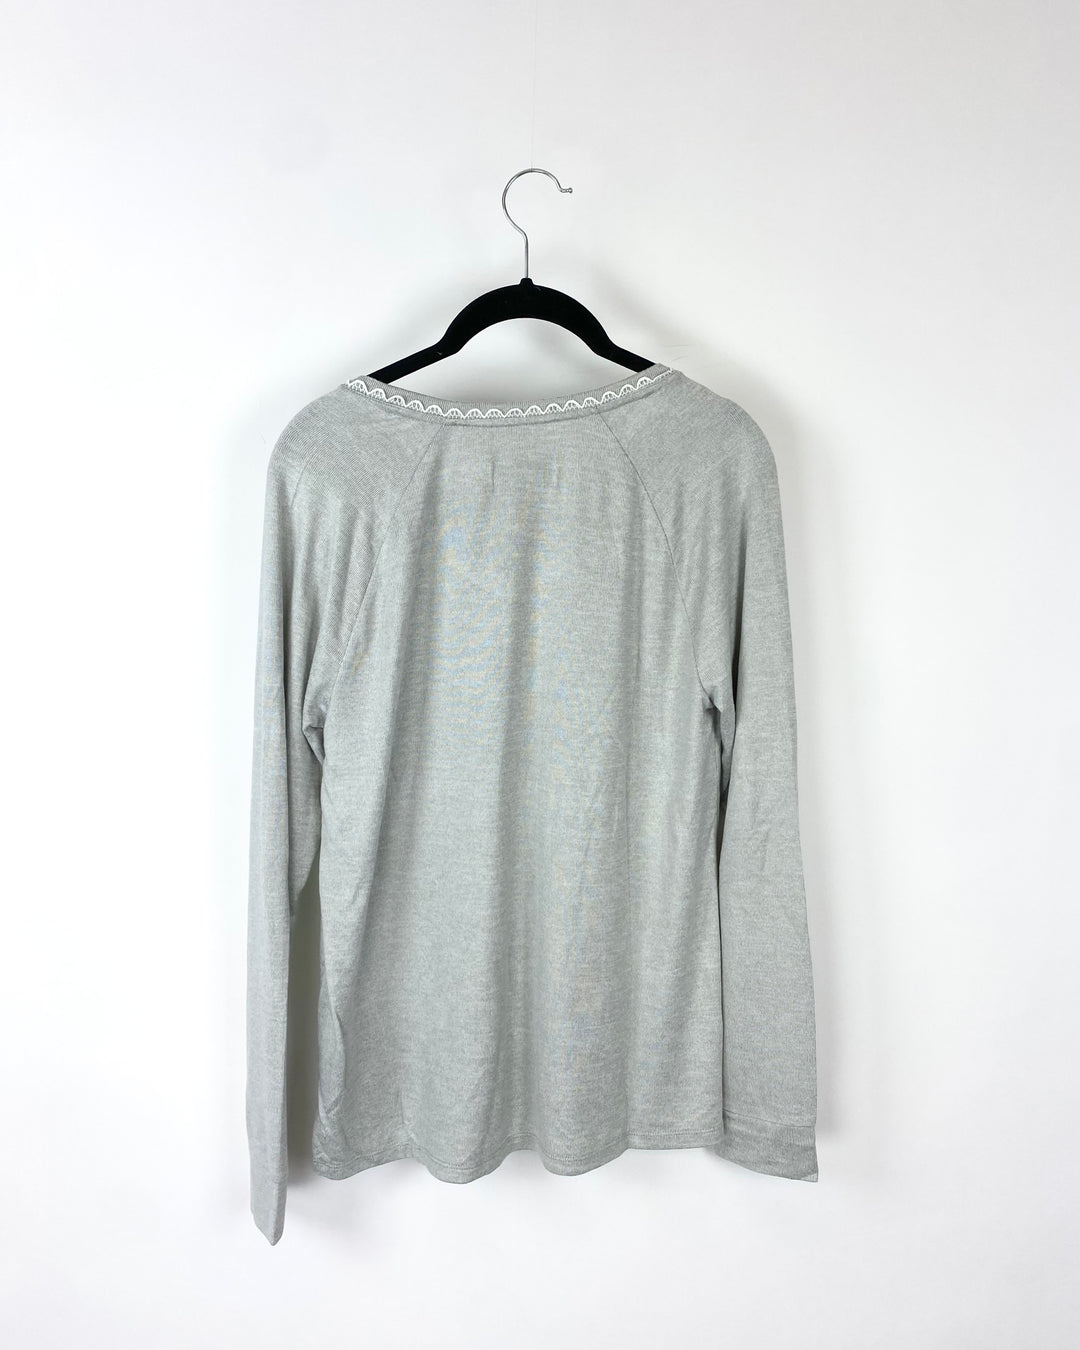 Heather Grey Pajama Shirt - Medium